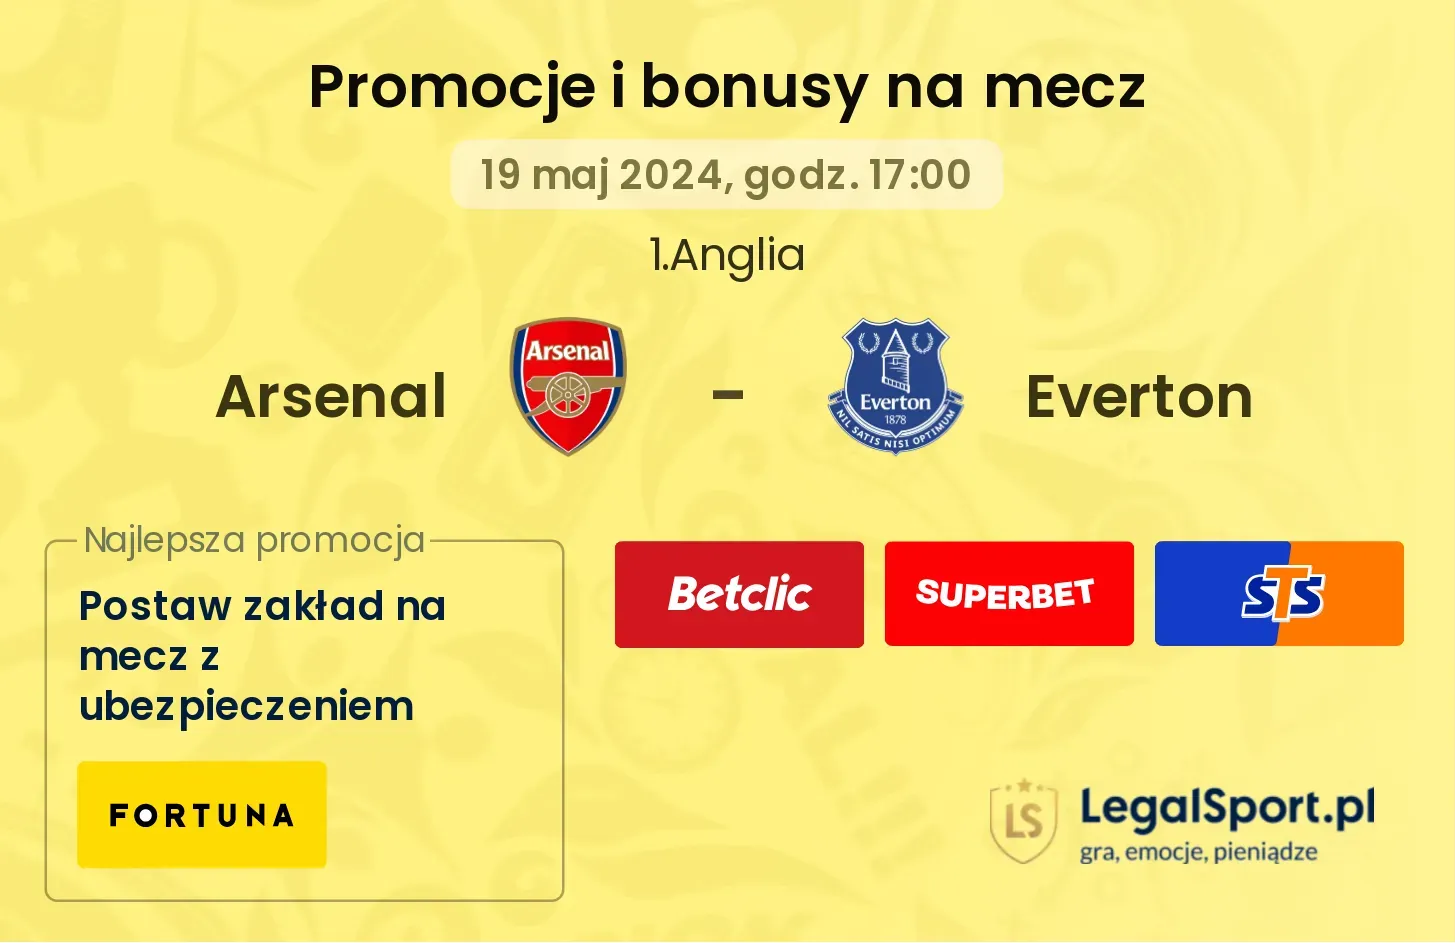 Arsenal - Everton bonusy i promocje (19.05, 17:00)